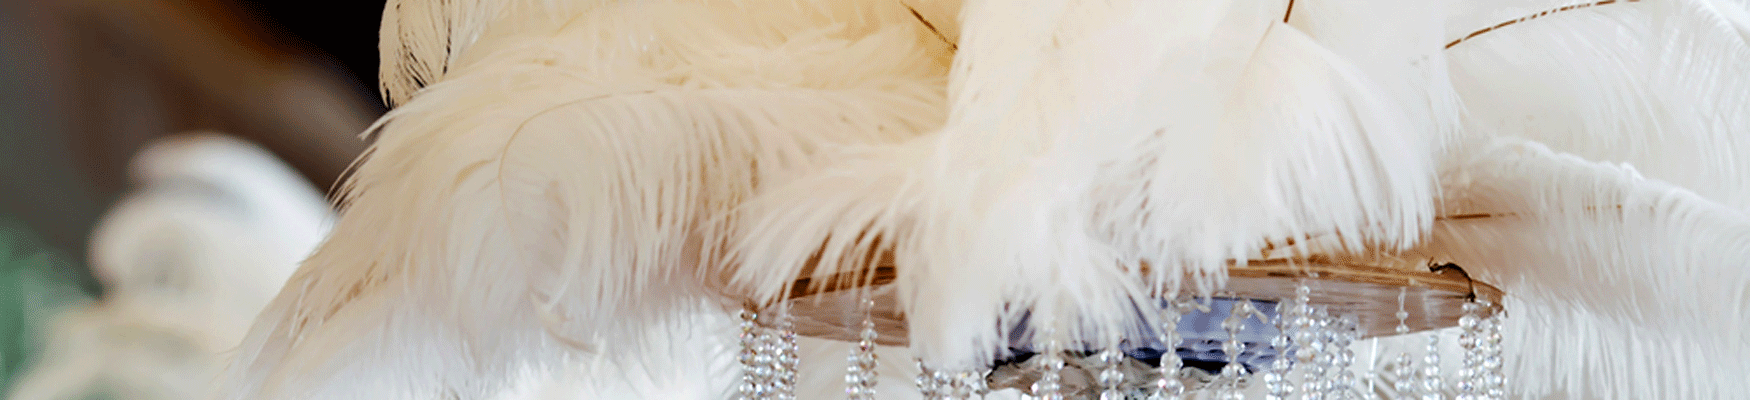 White Ostrich Feathers/Plumes Wholesale dozen bulk 28-30 inch 5 Pieces  ostrich wings ostrich drabs large feathers indian feathers feather products  ostrich wedding Centerpieces